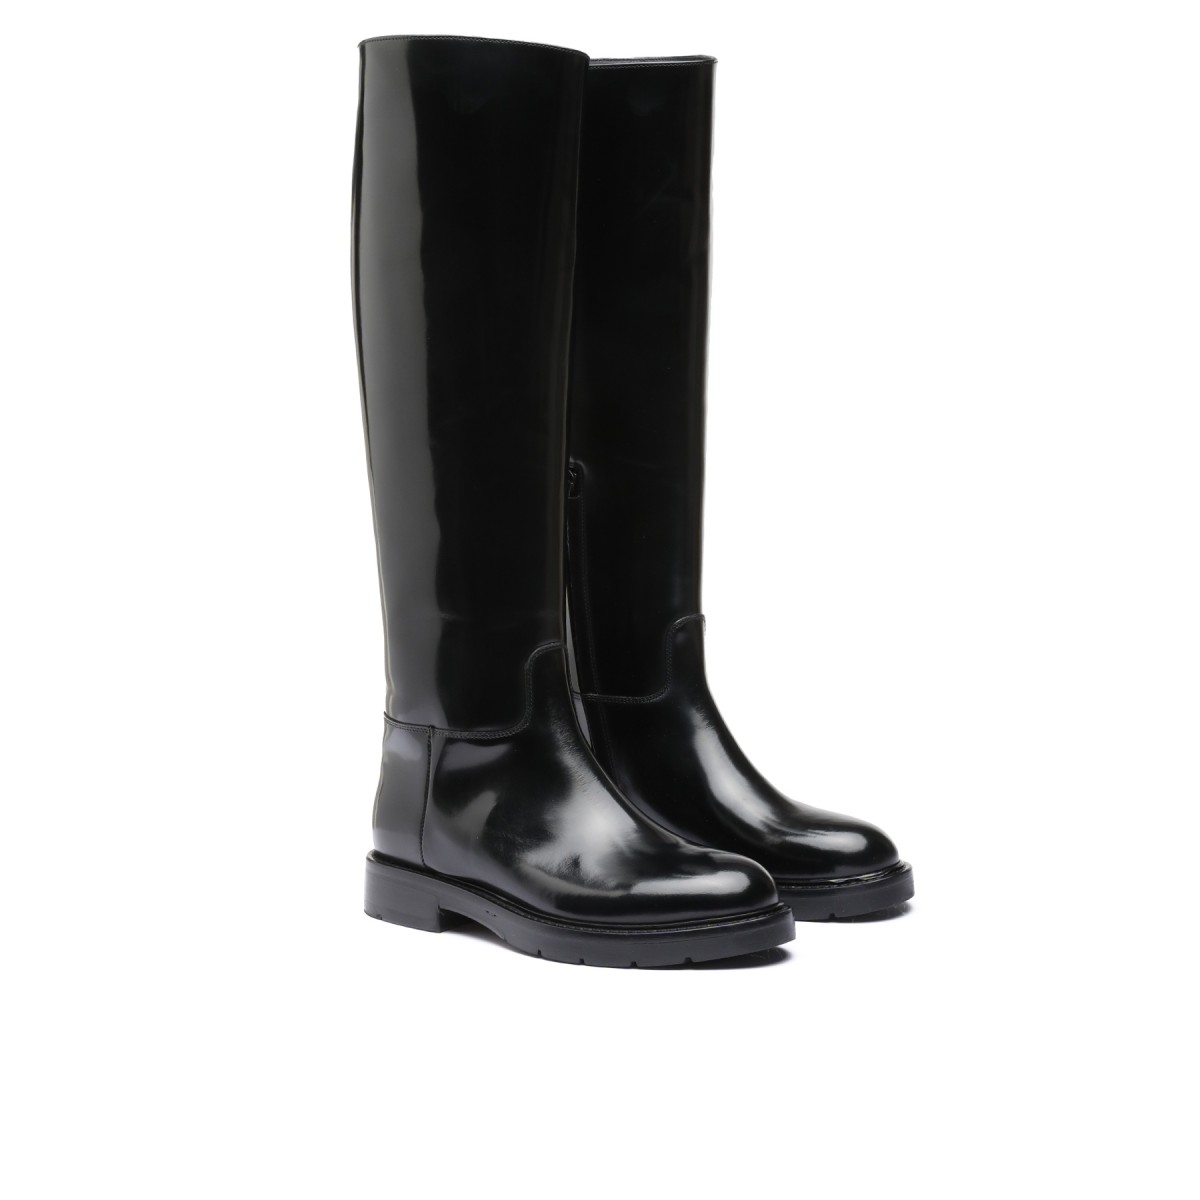 Merini black leather boots